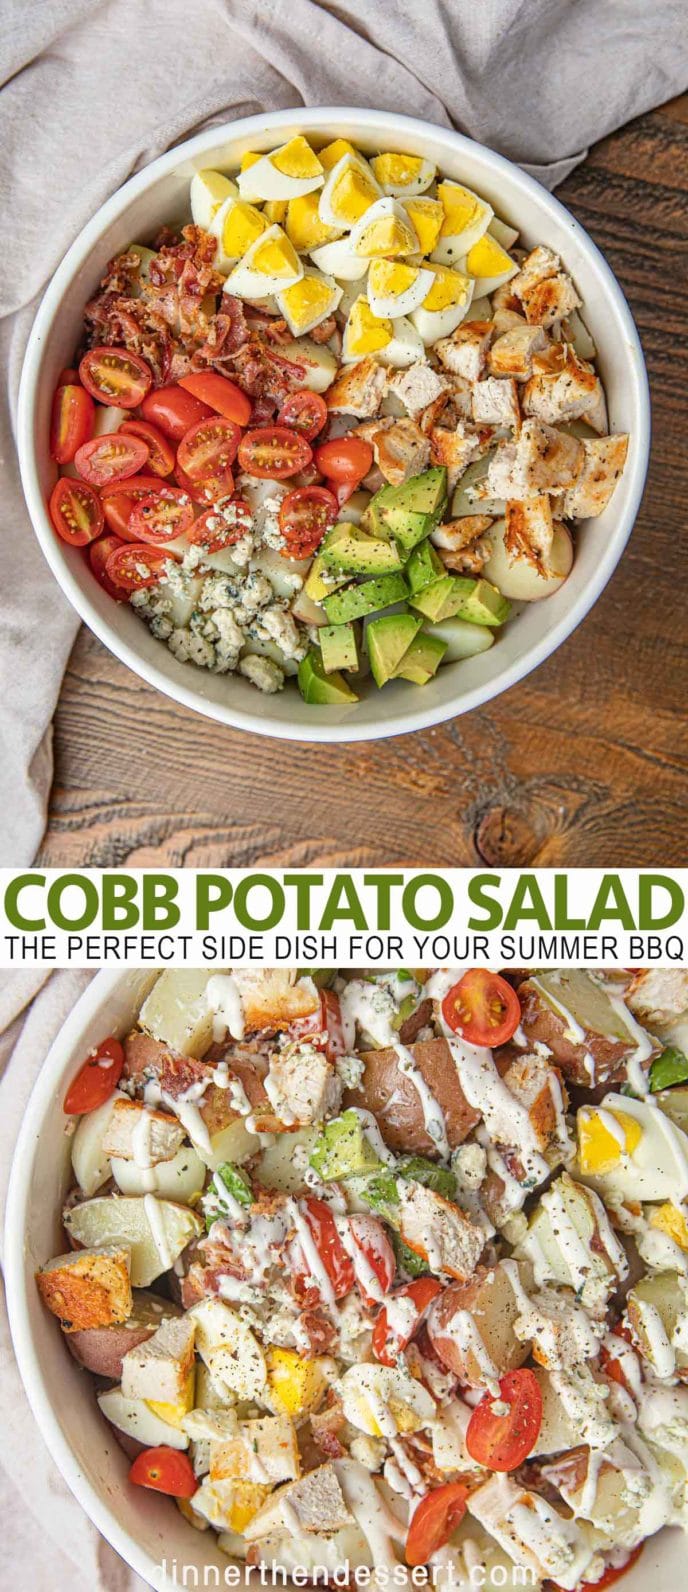 Cobb Potato Salad with Chicken